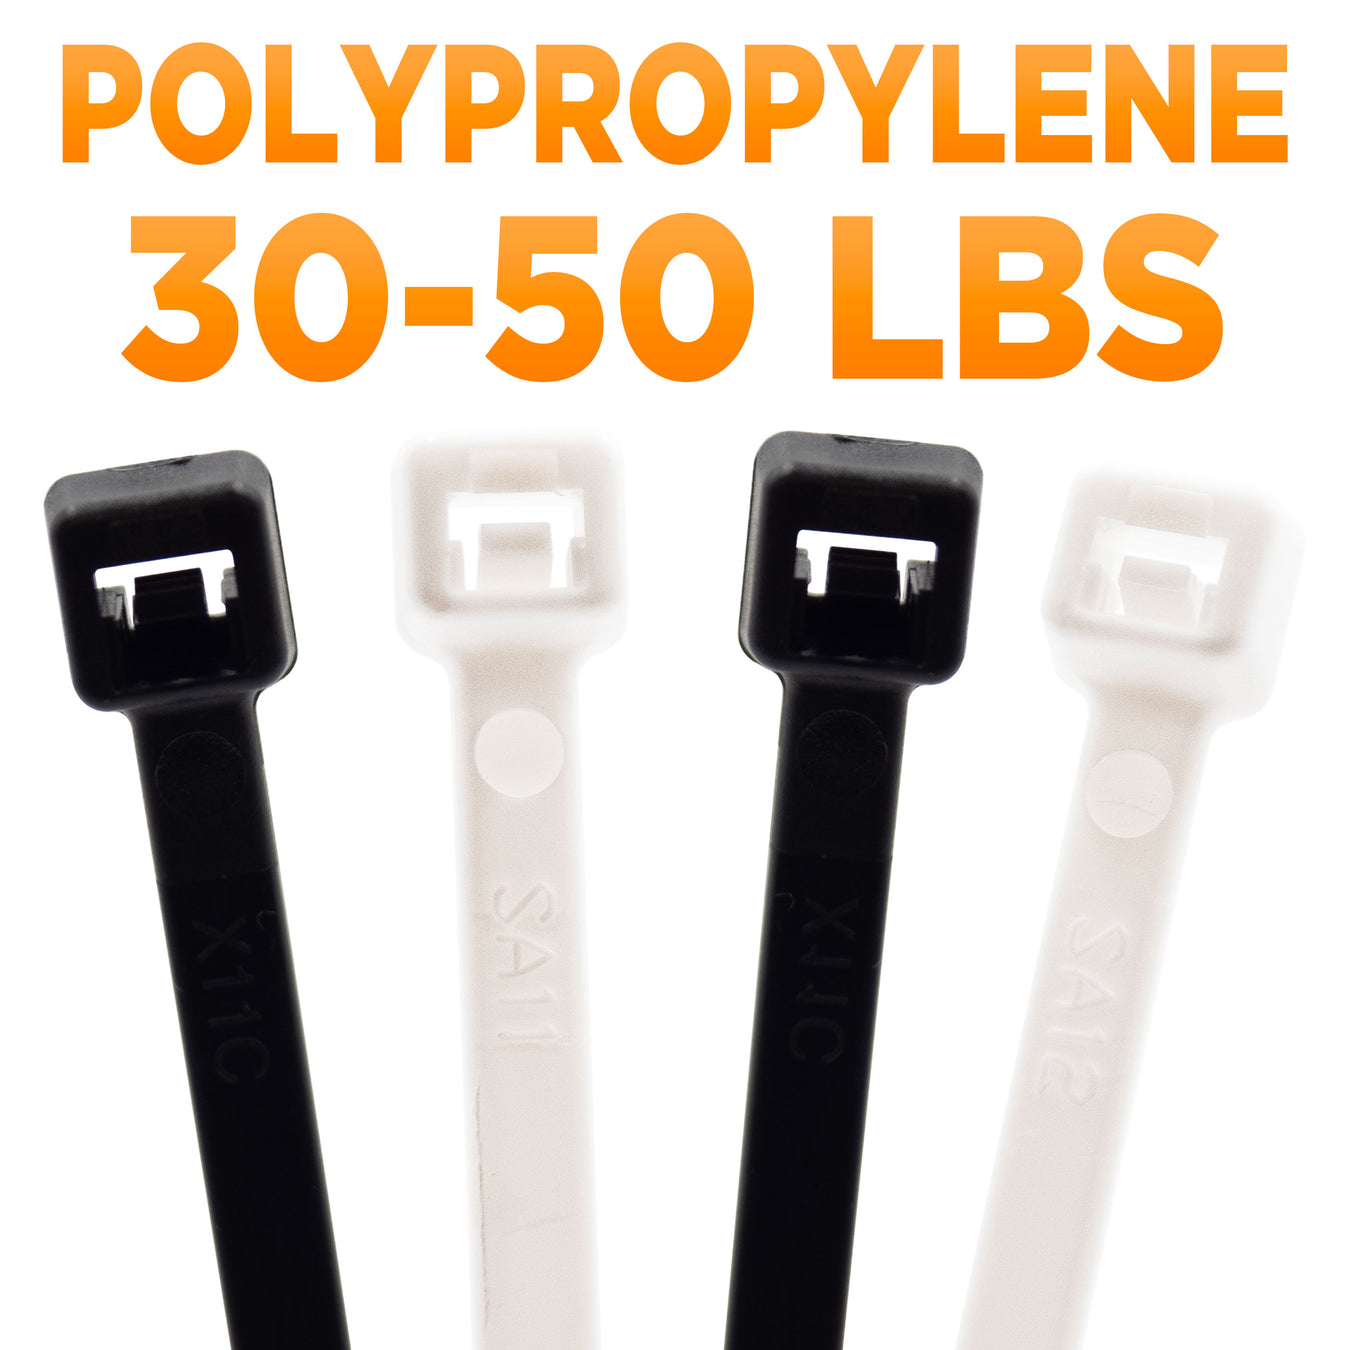 Polypropylene Cable Ties